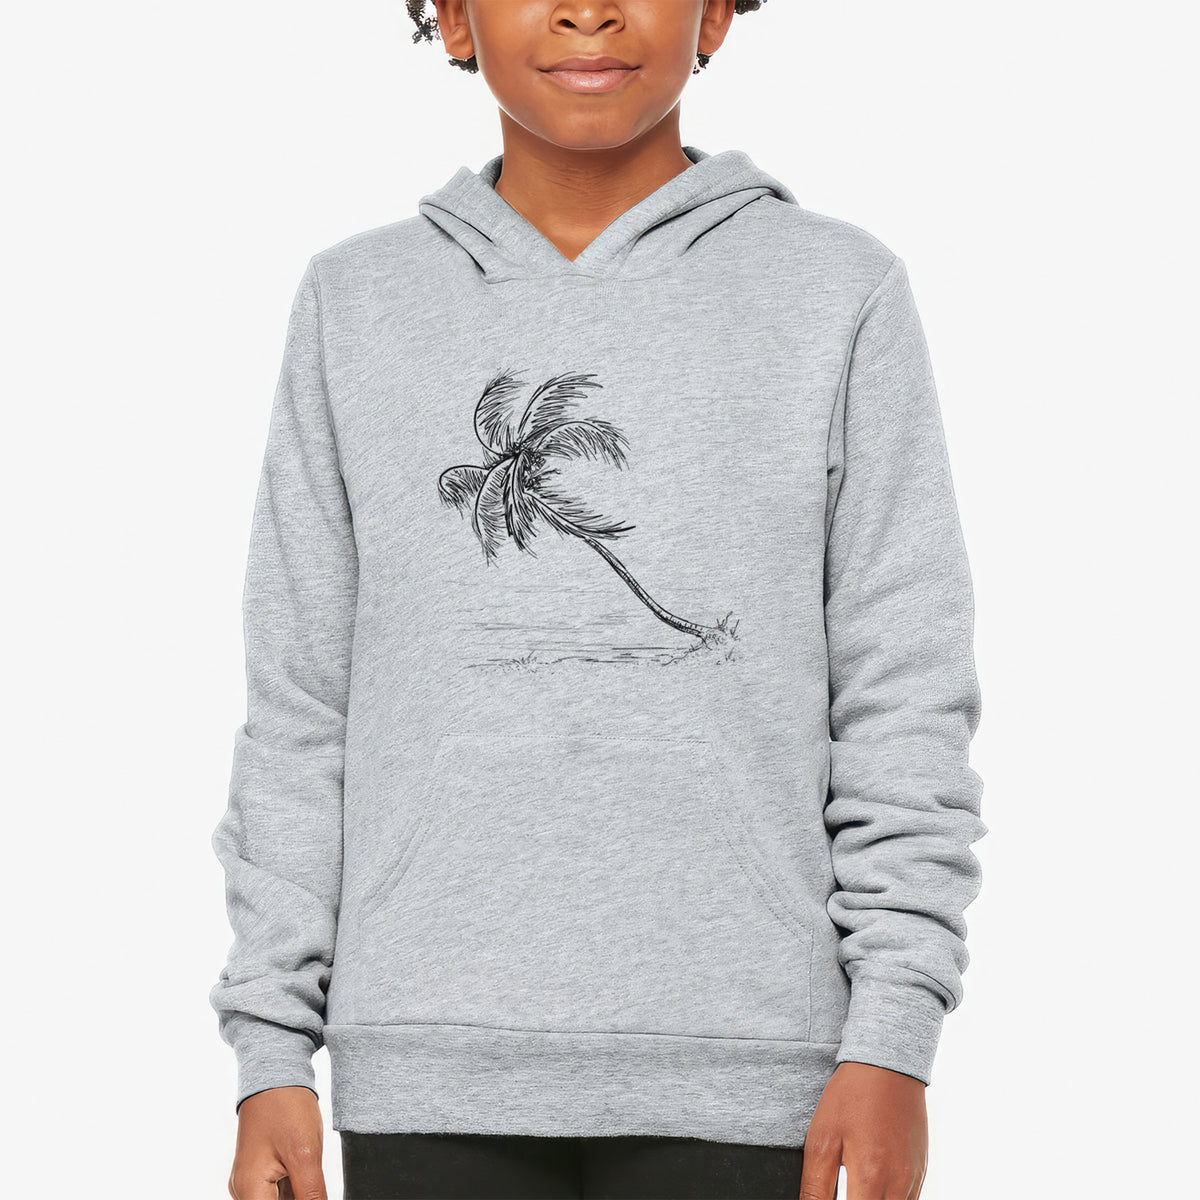 Coconut Palm - Cocos nucifera - Youth Hoodie Sweatshirt